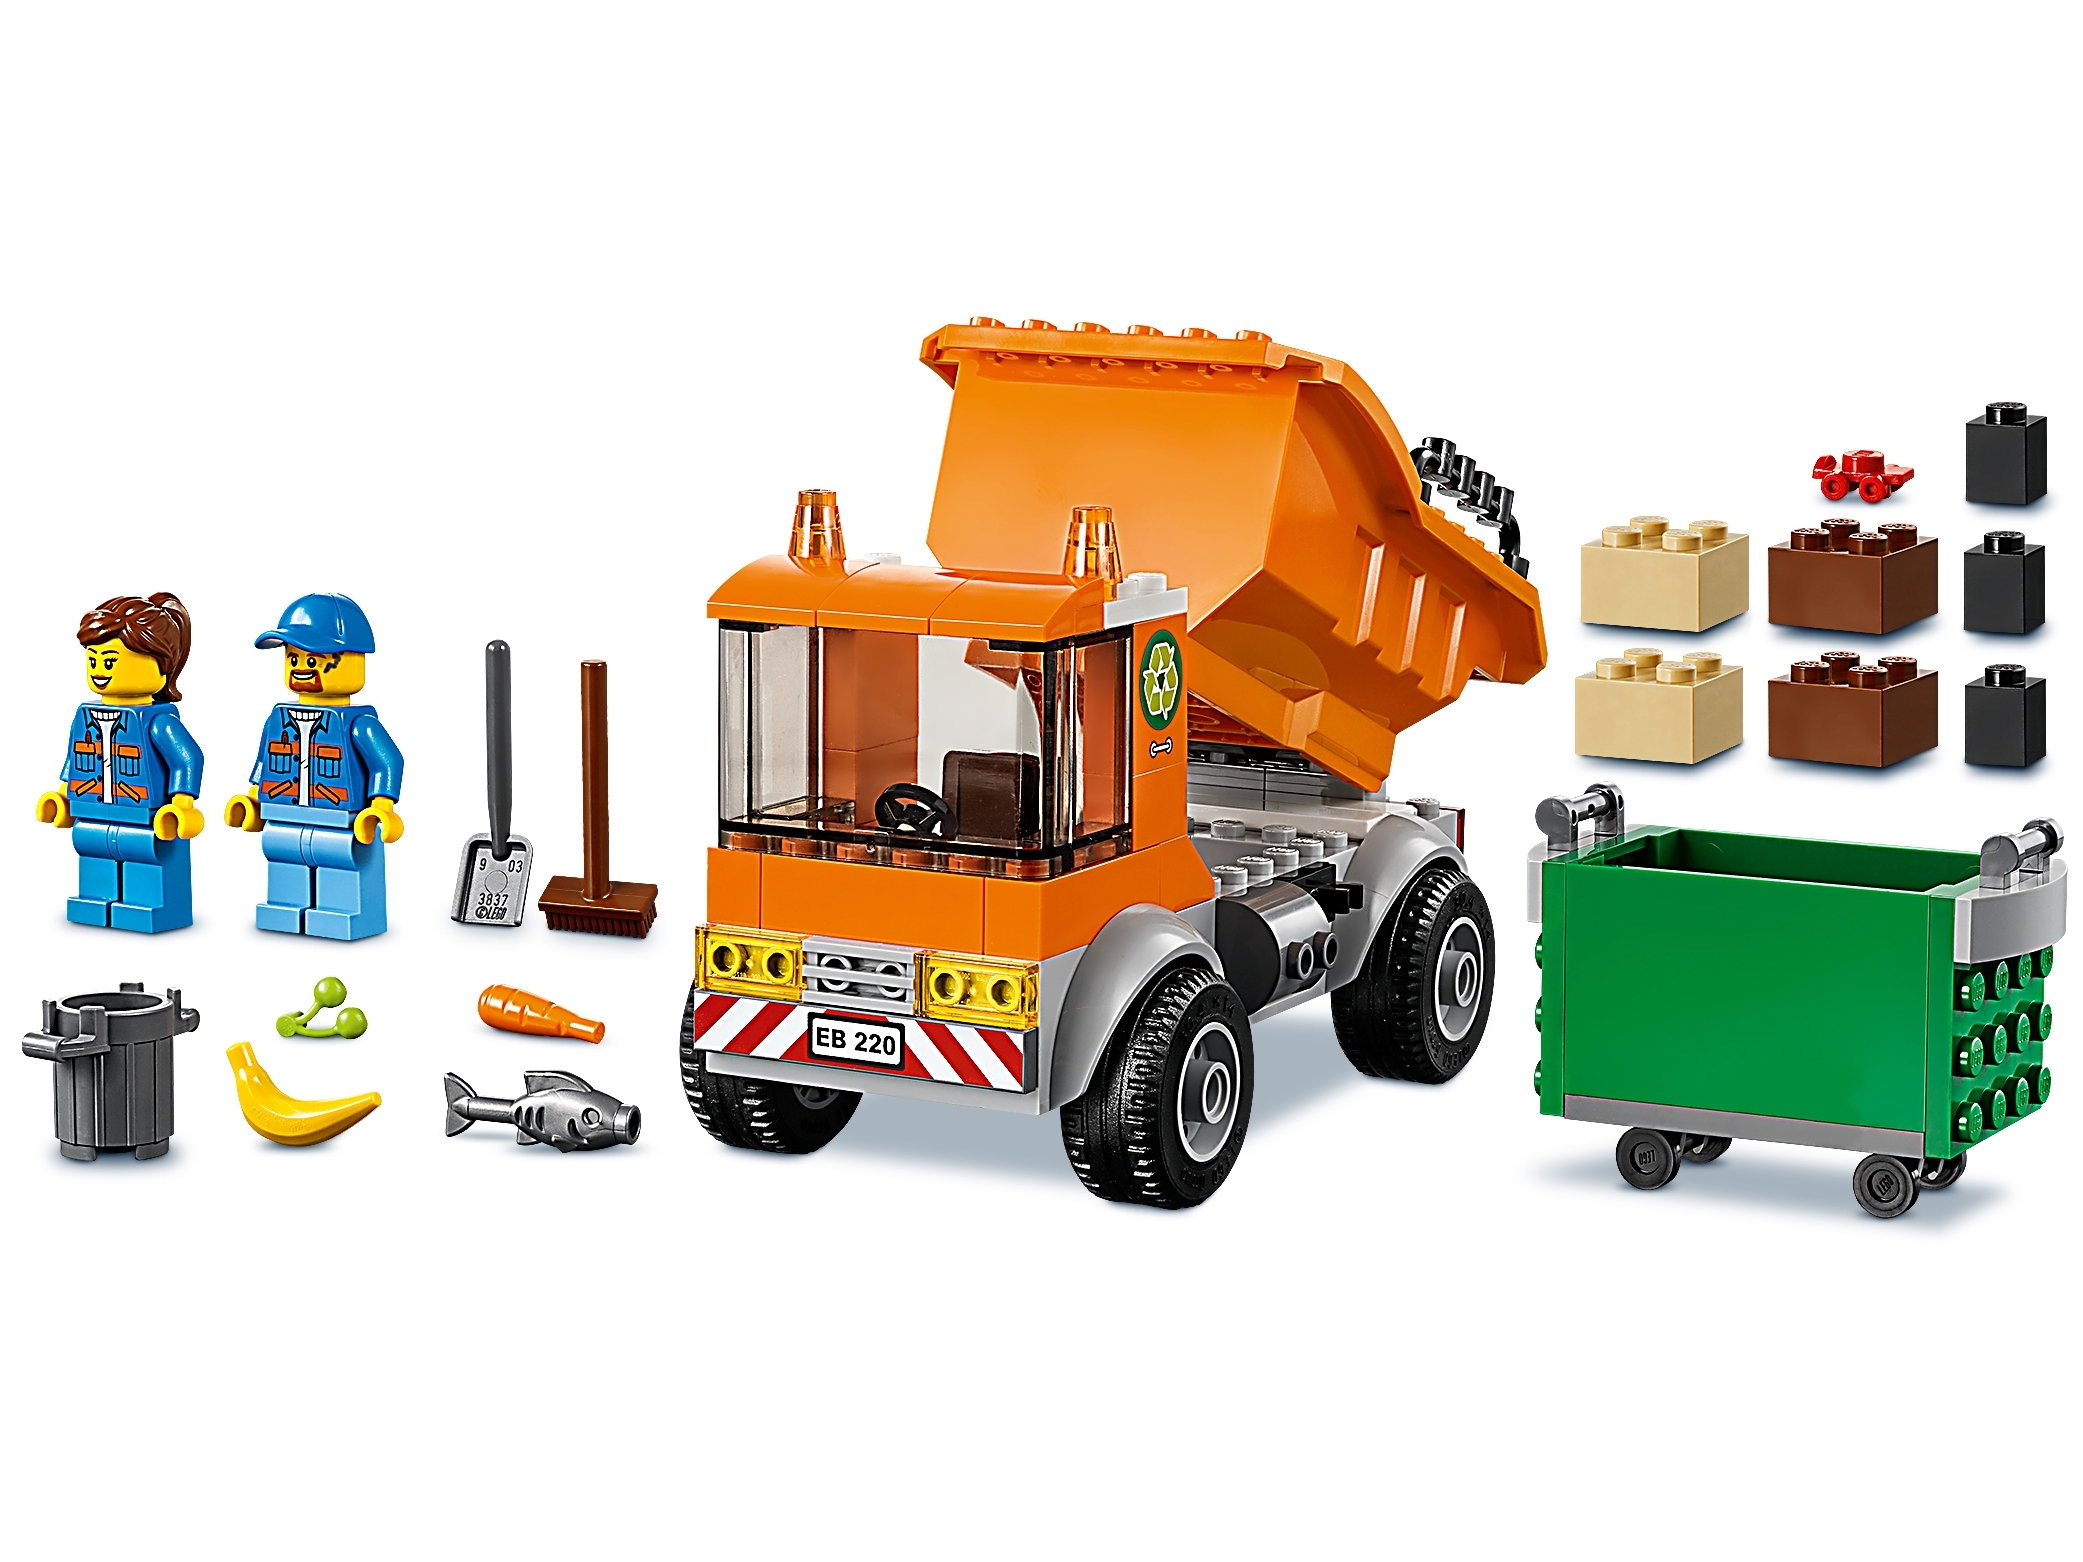 Disciplinære Kompliment universitetsområde Garbage Truck 60220 | City | Buy online at the Official LEGO® Shop US